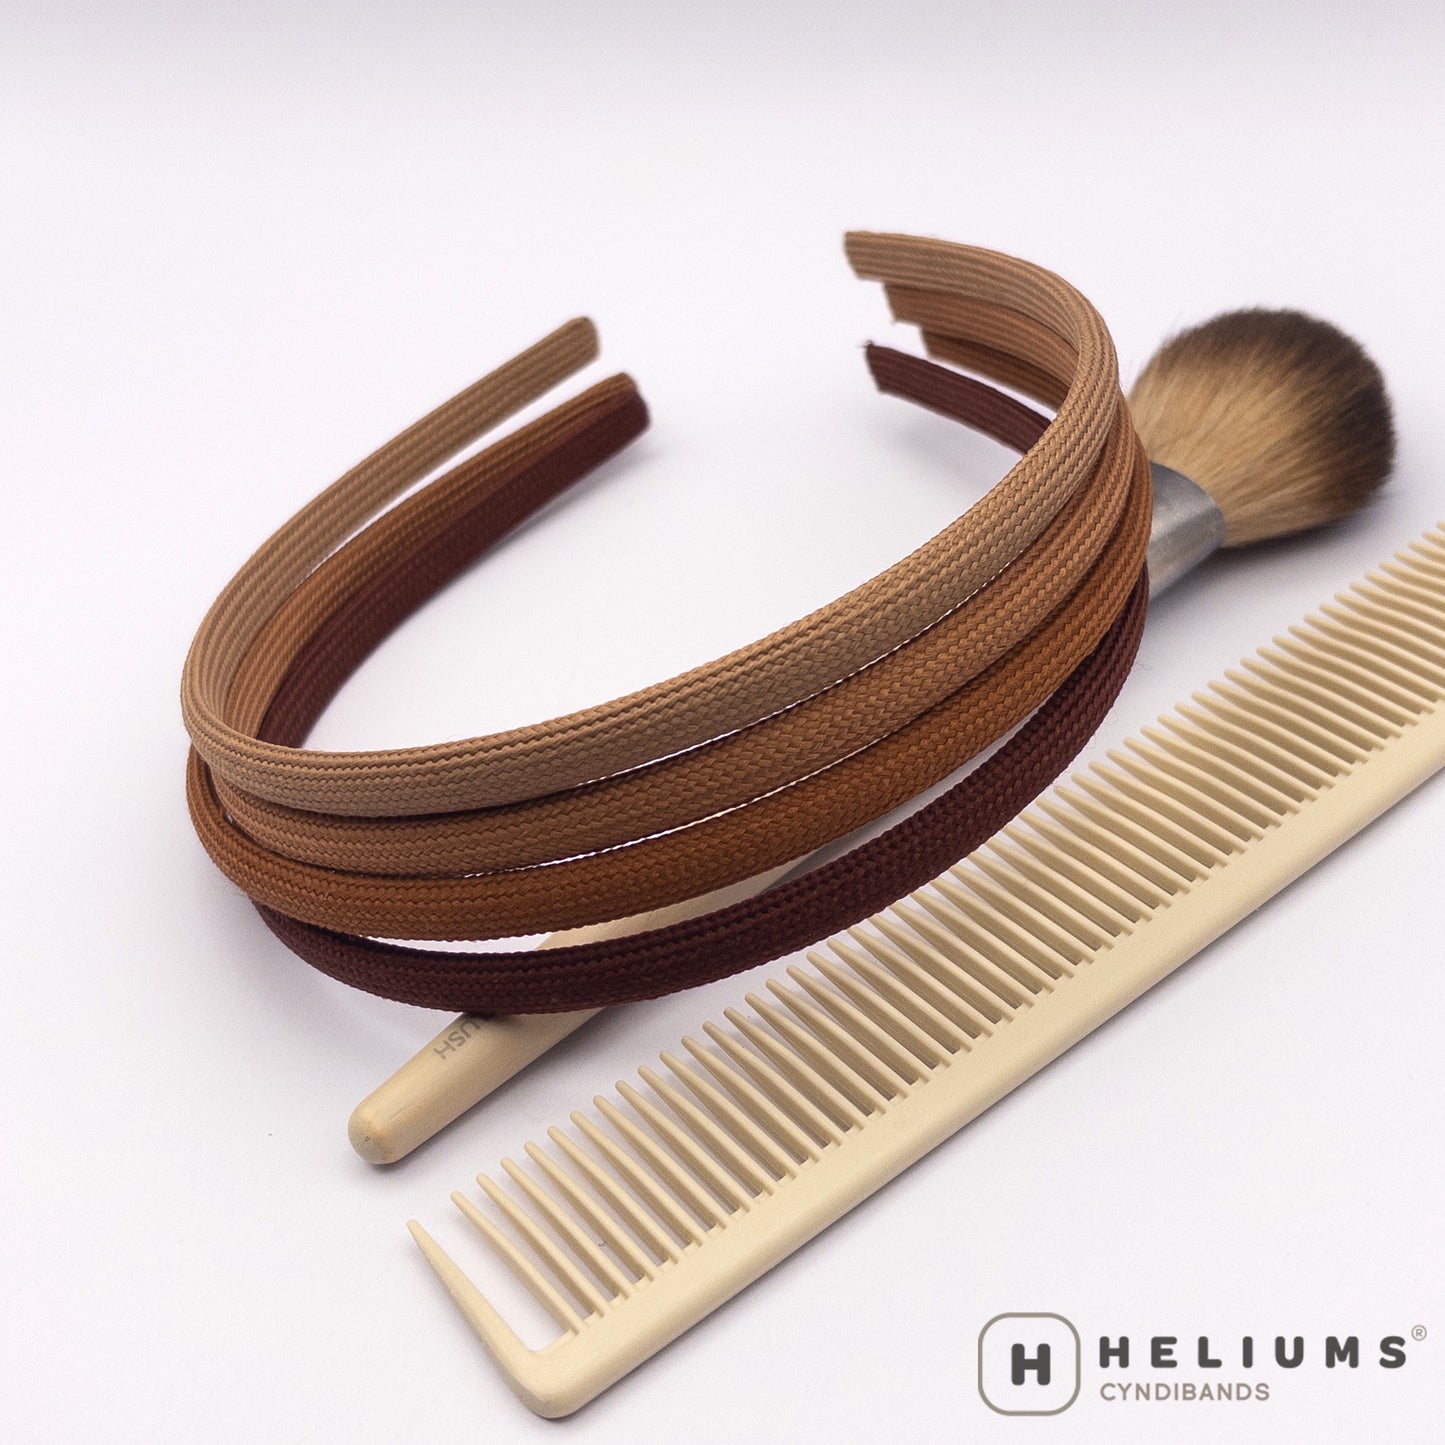 Heliums Thin Headbands - 4 Pack